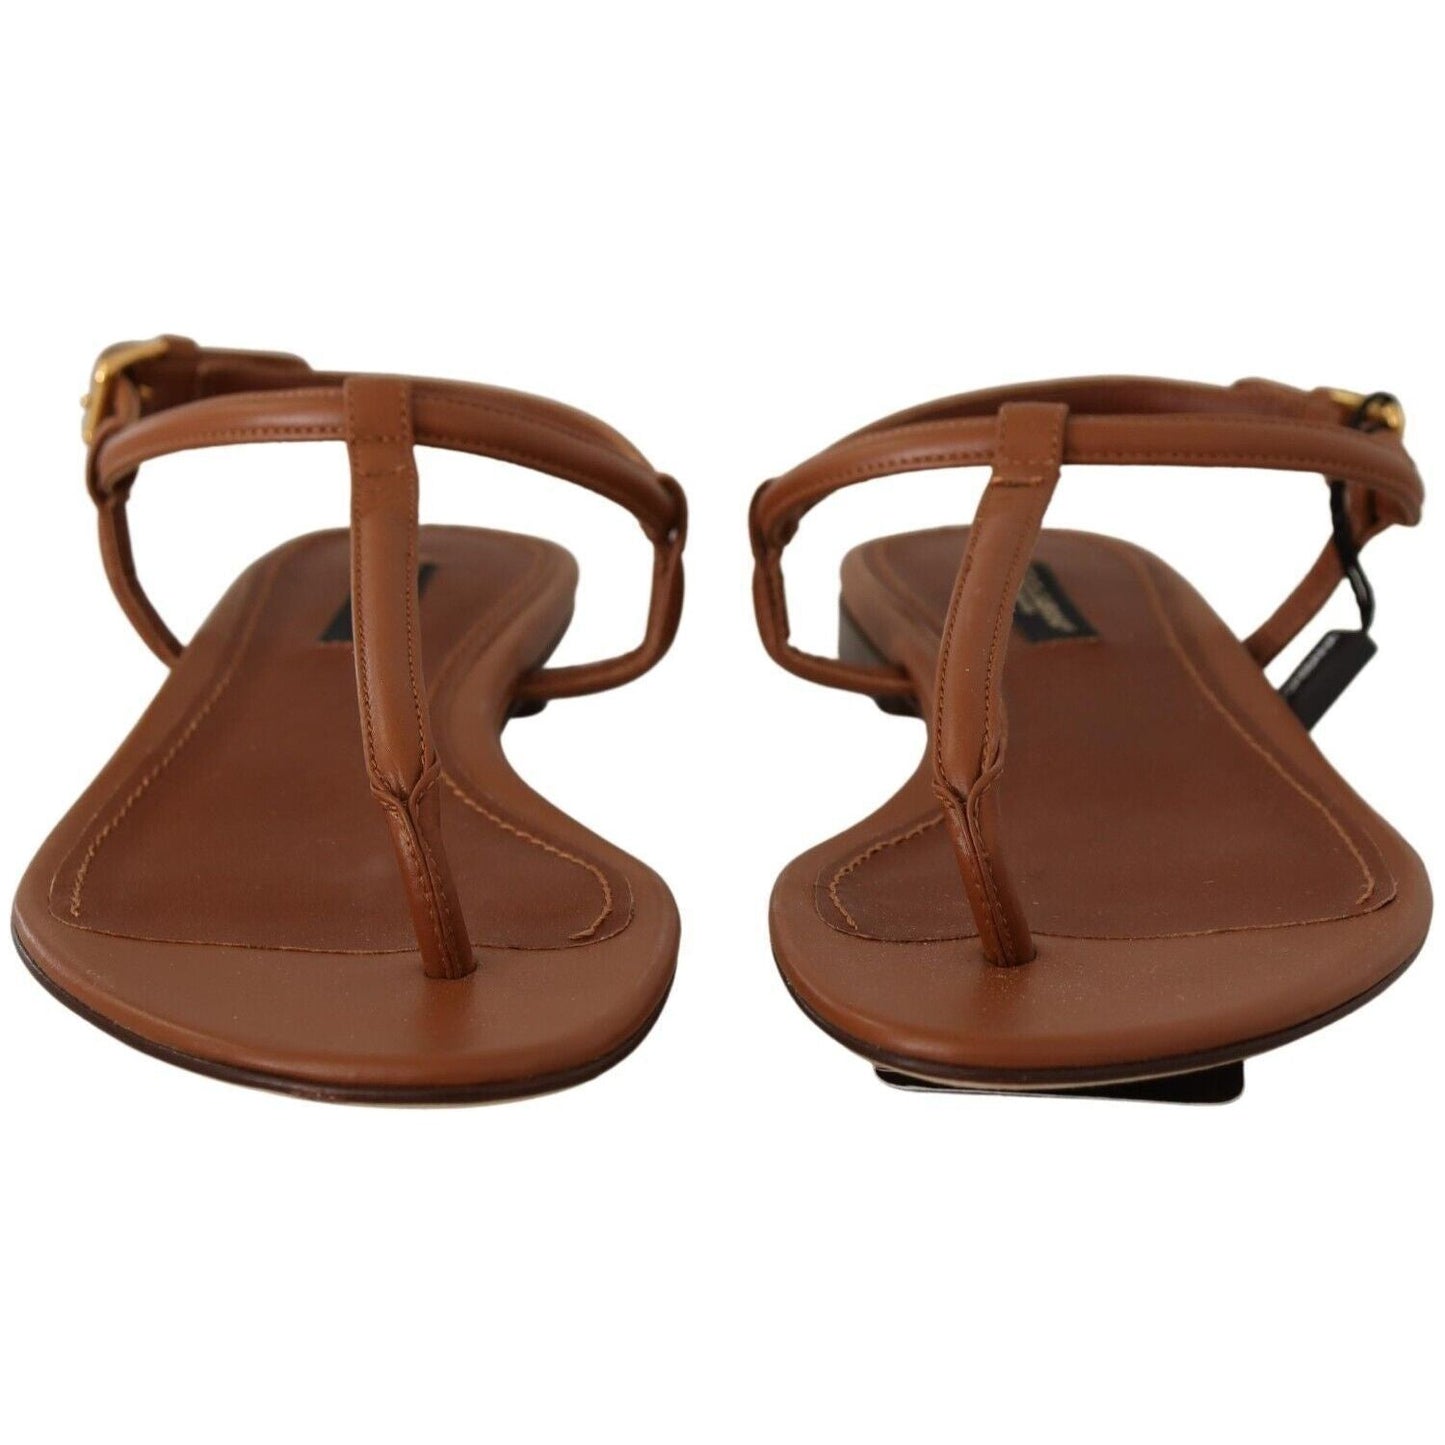 Dolce & Gabbana Elegant Leather T-Strap Flat Sandals brown-leather-t-strap-slides-flats-sandals-shoes s-l1600-36-17-6c61dba8-5cc.jpg